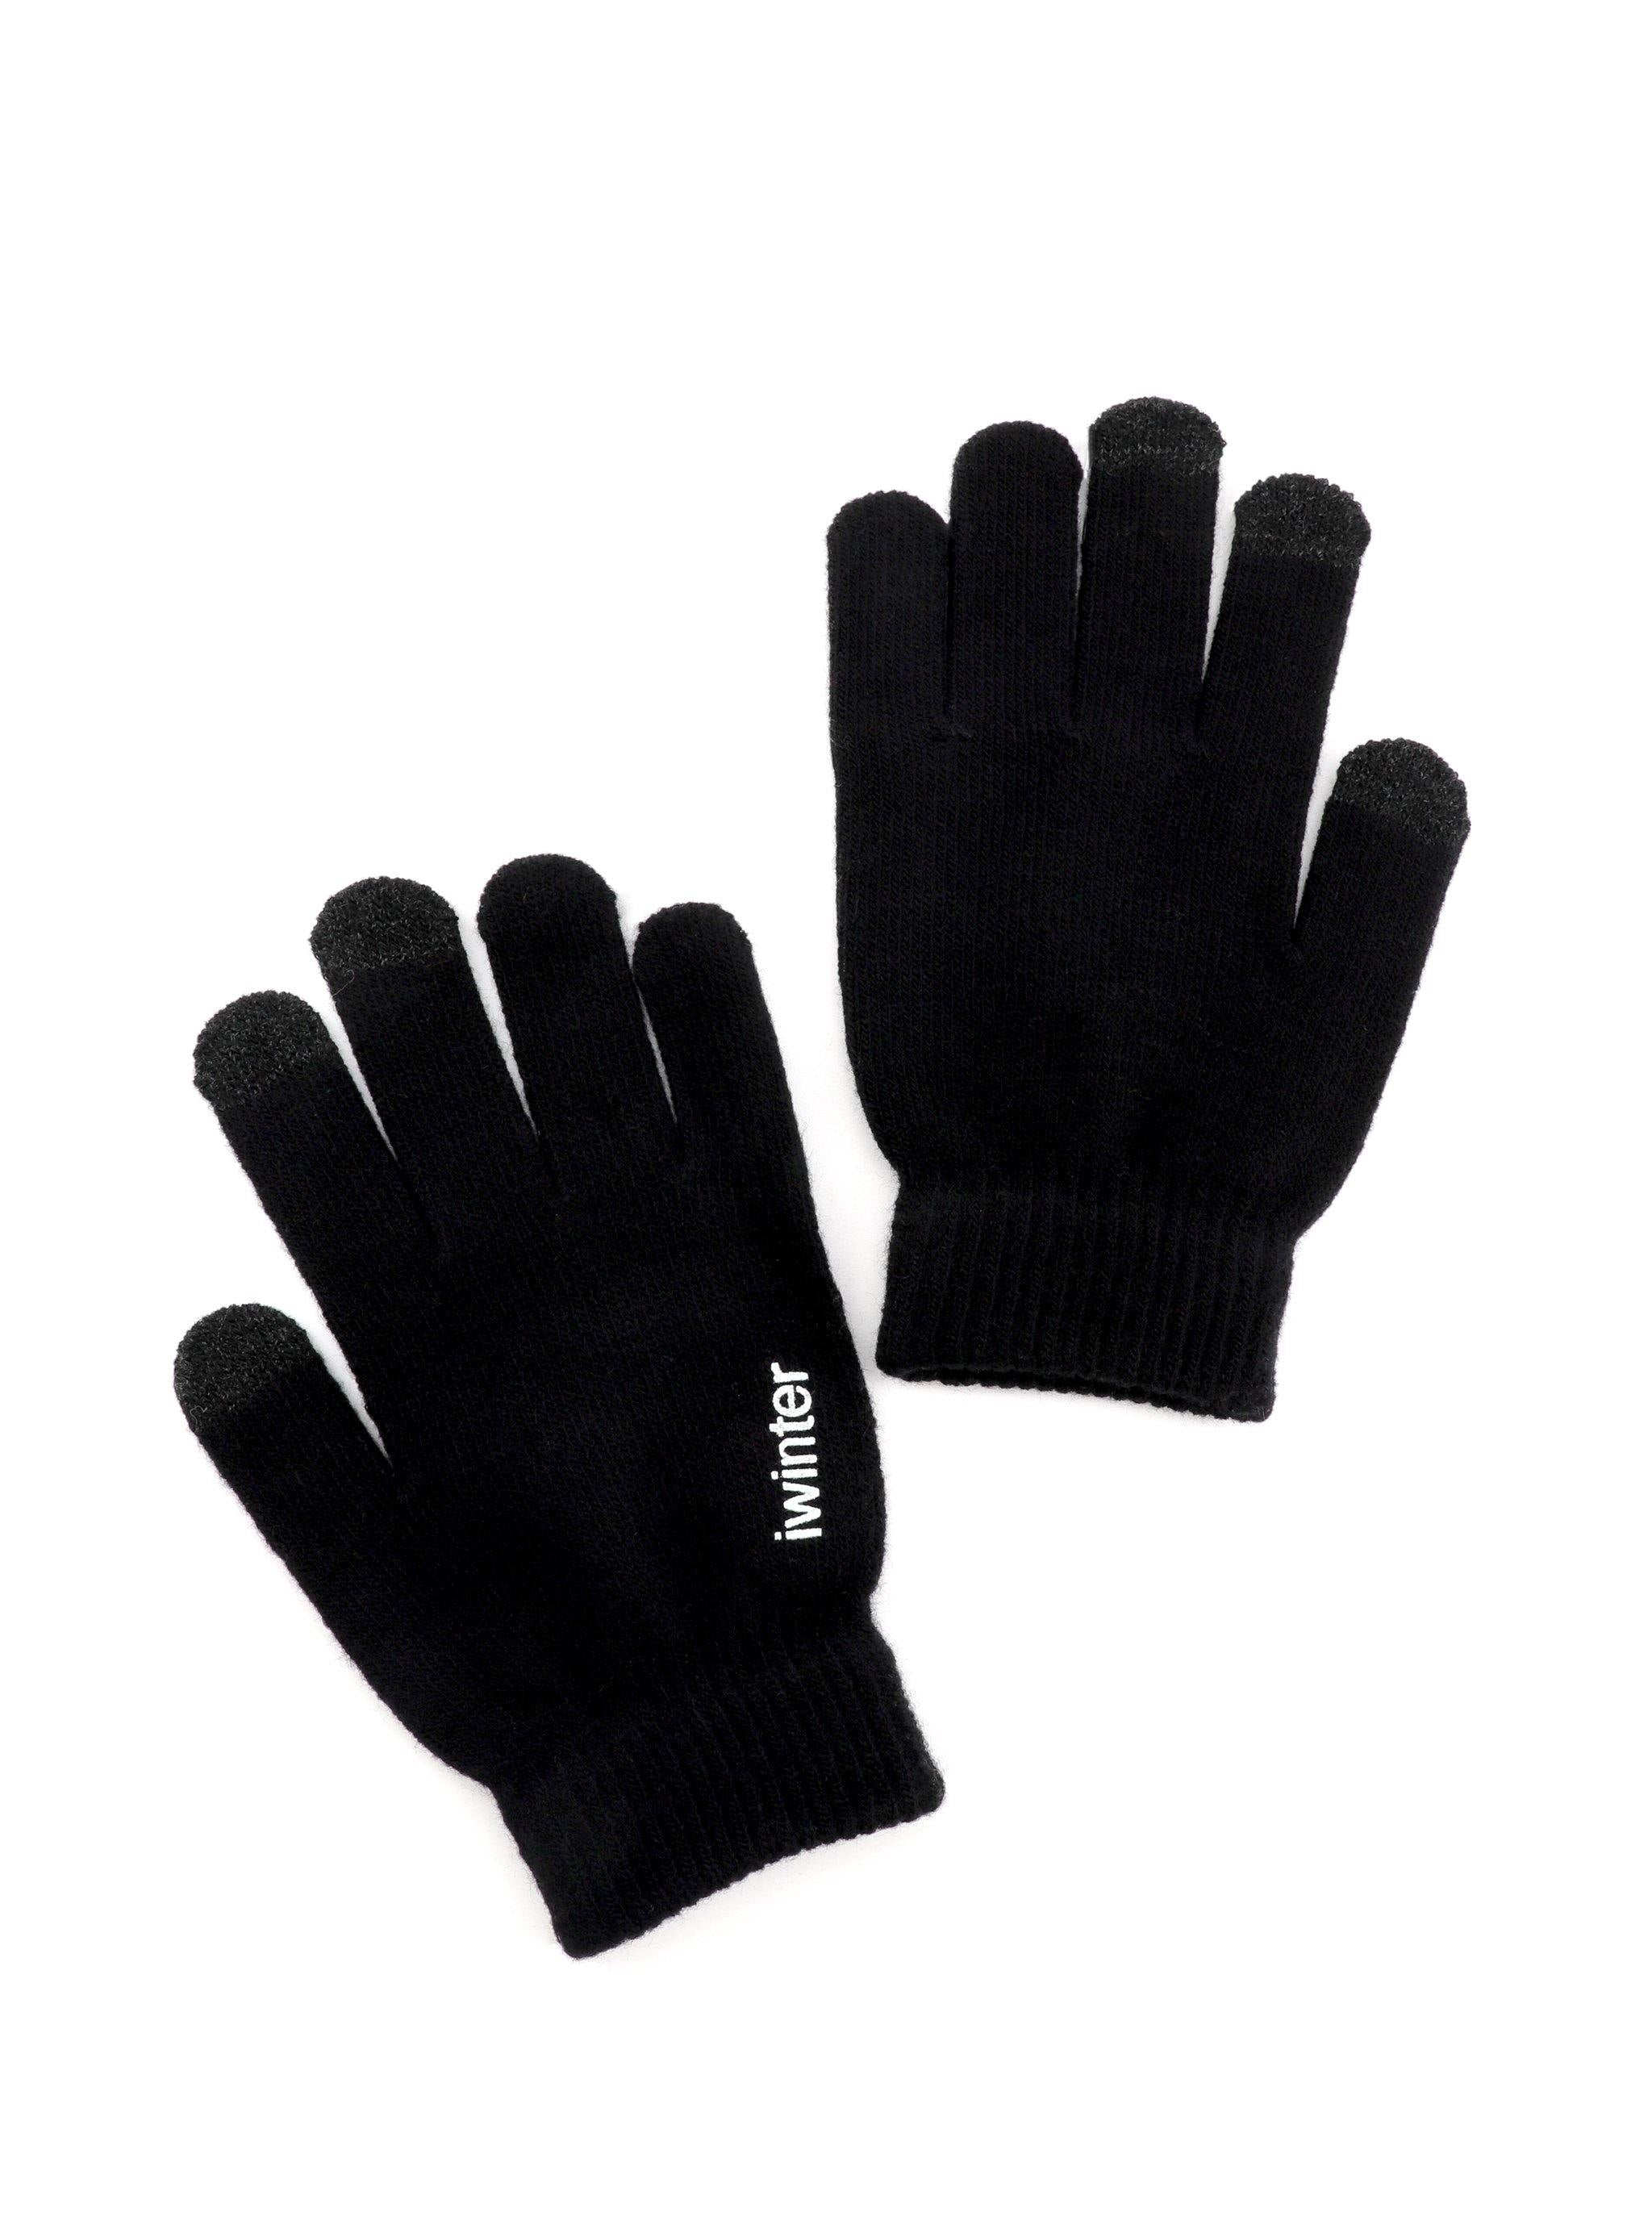 Pheba Fingerless Wool Gloves - Simplique Mode